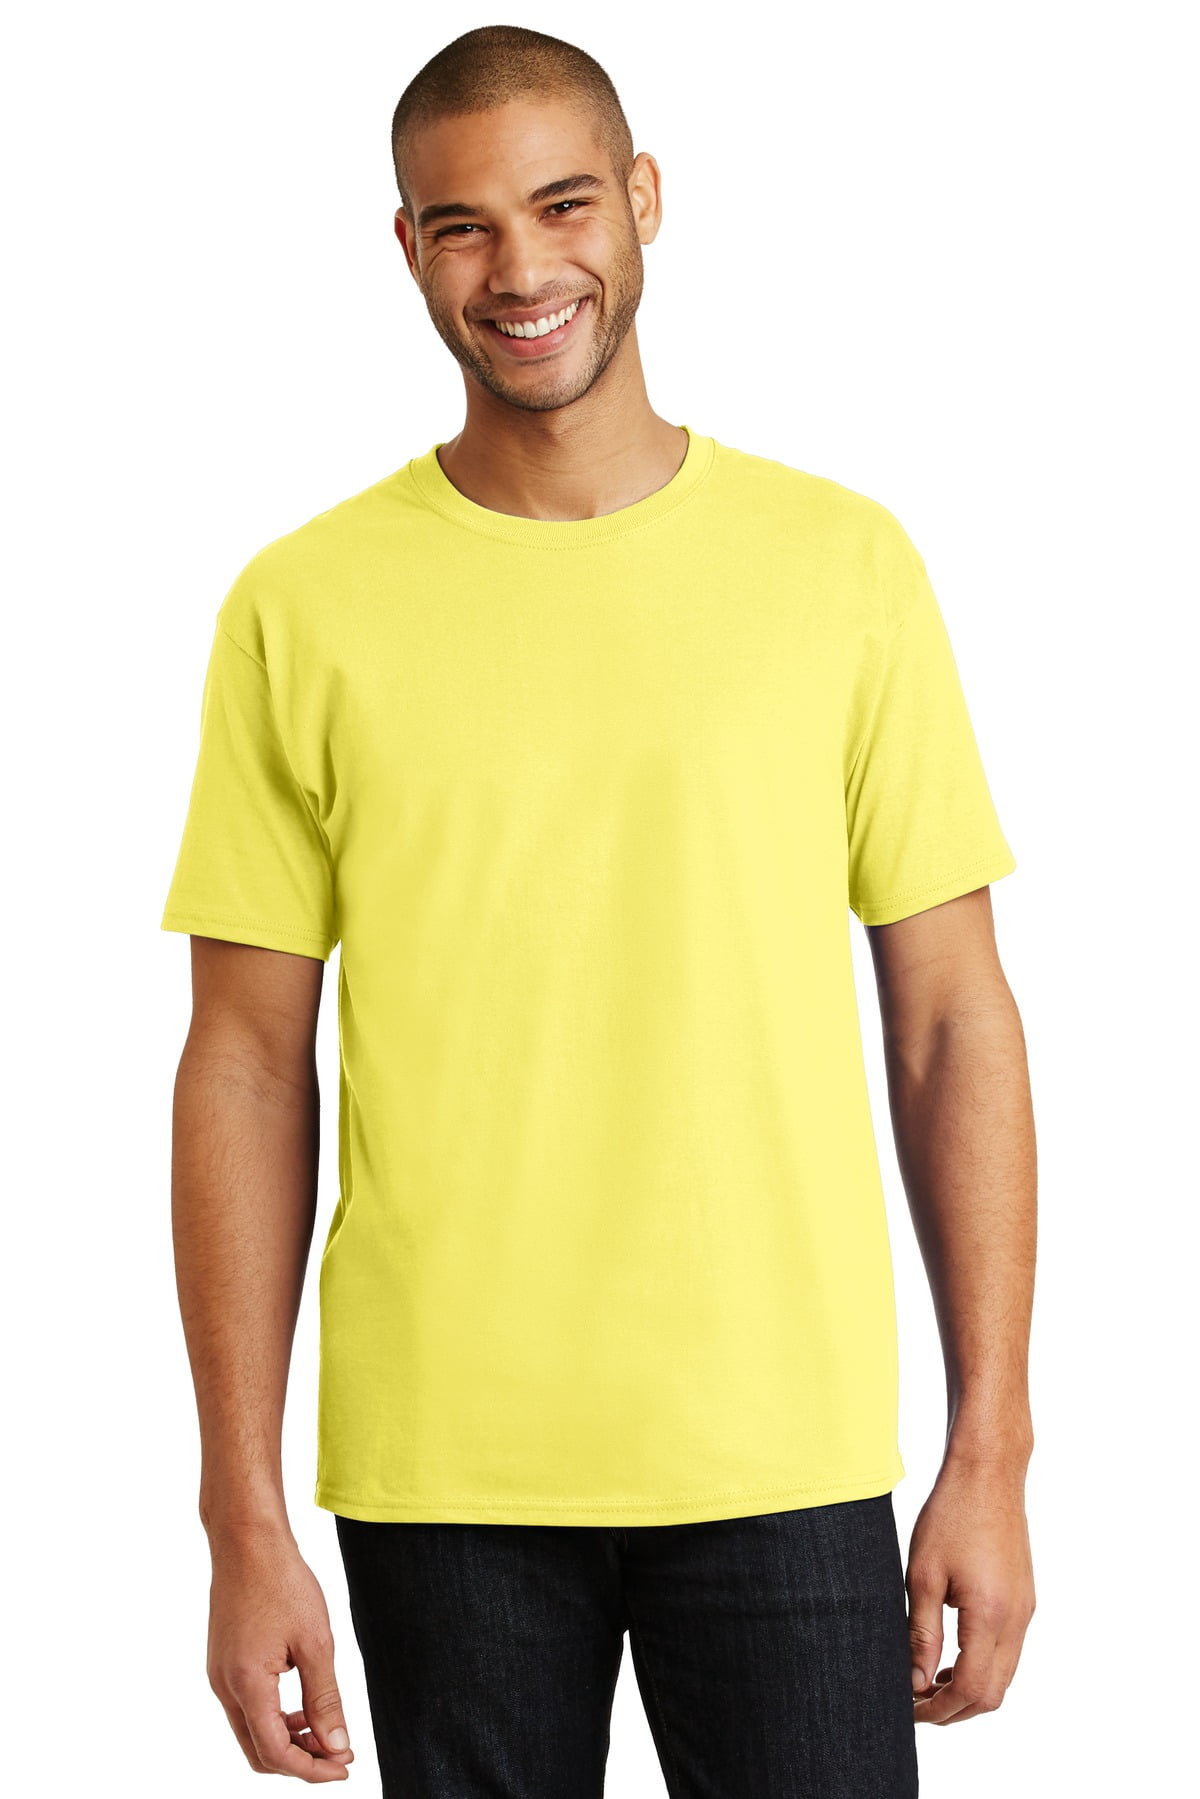 Hanes 5250T Mens Tagless T-Shirt ComfortSoft 100% Cotton